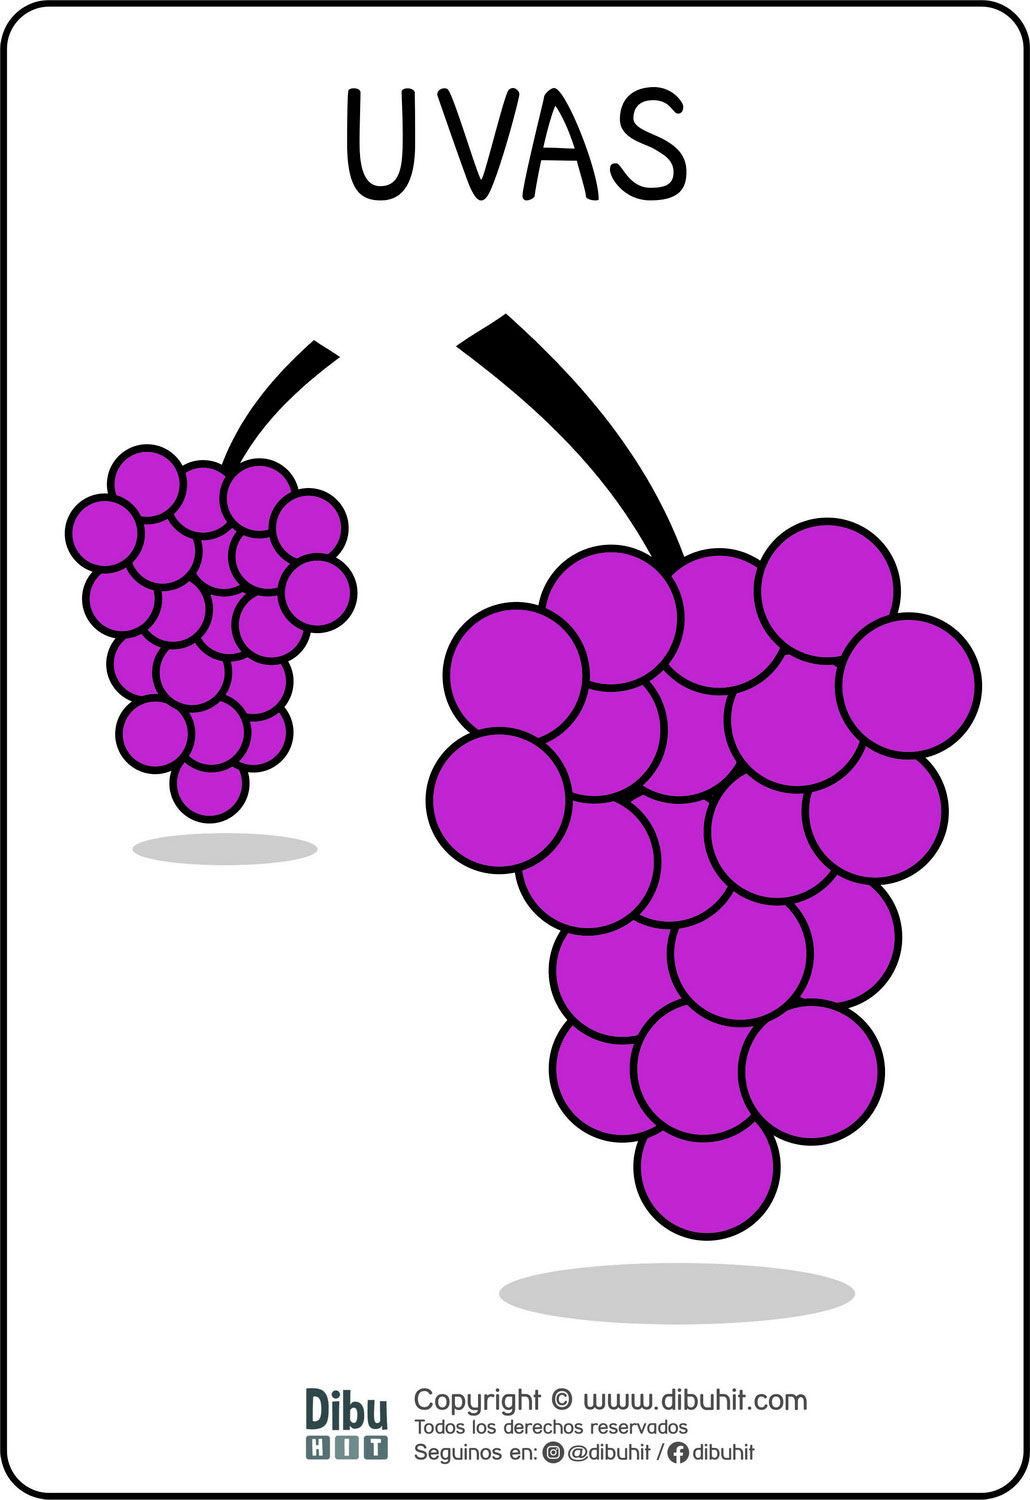 Lamina didactica furtas uvas violetas